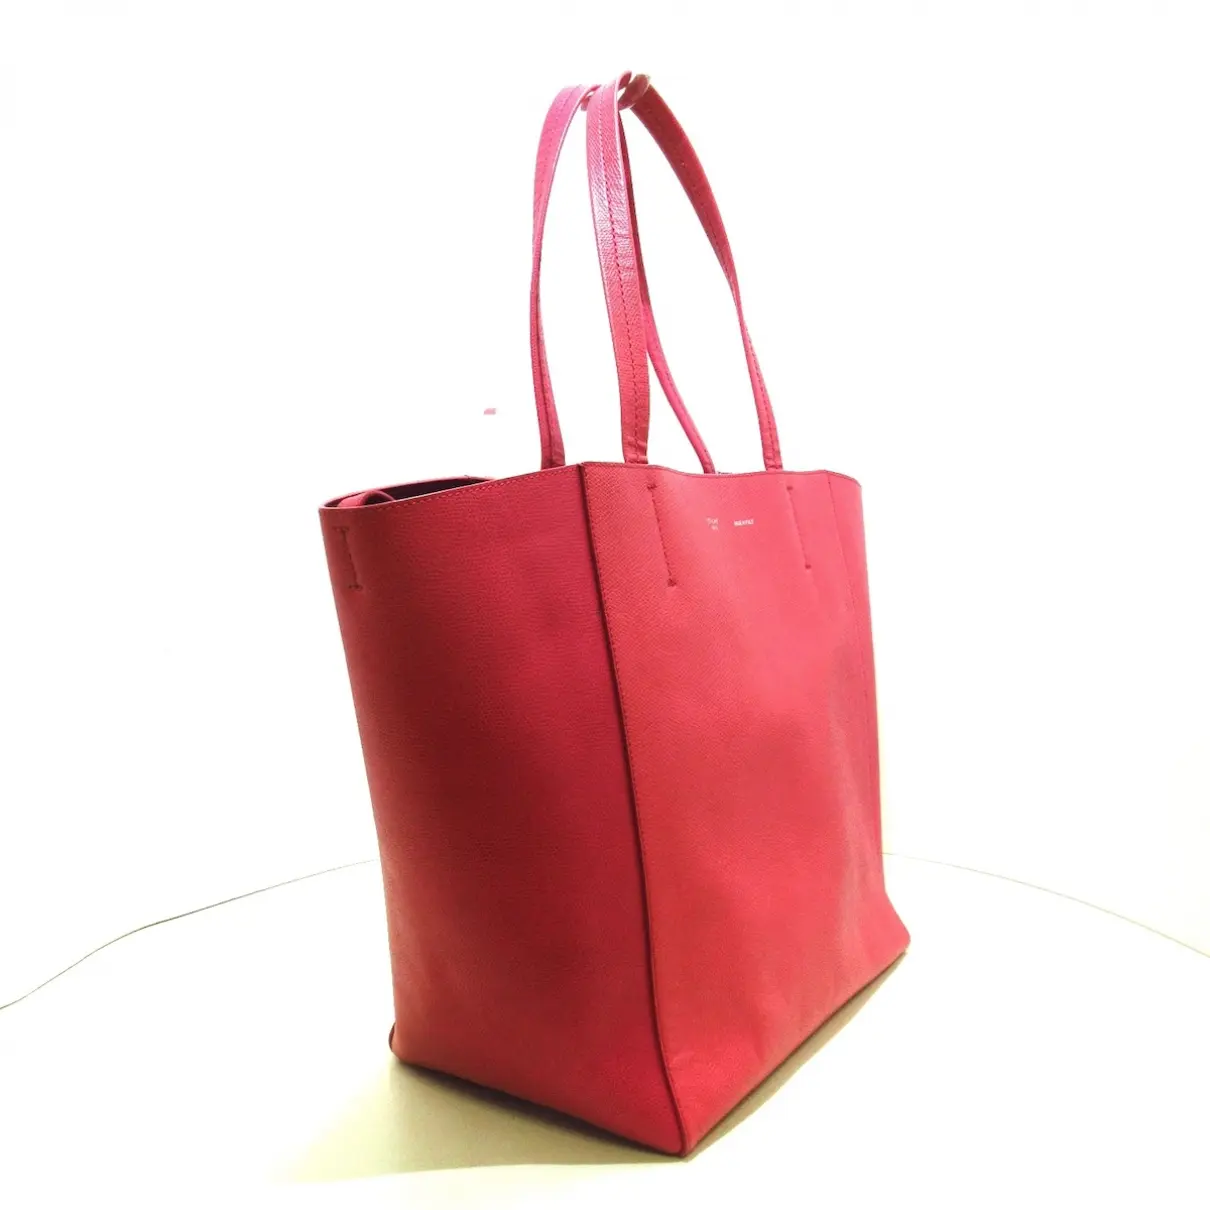 Buy Celine Cabas Phantom leather handbag online